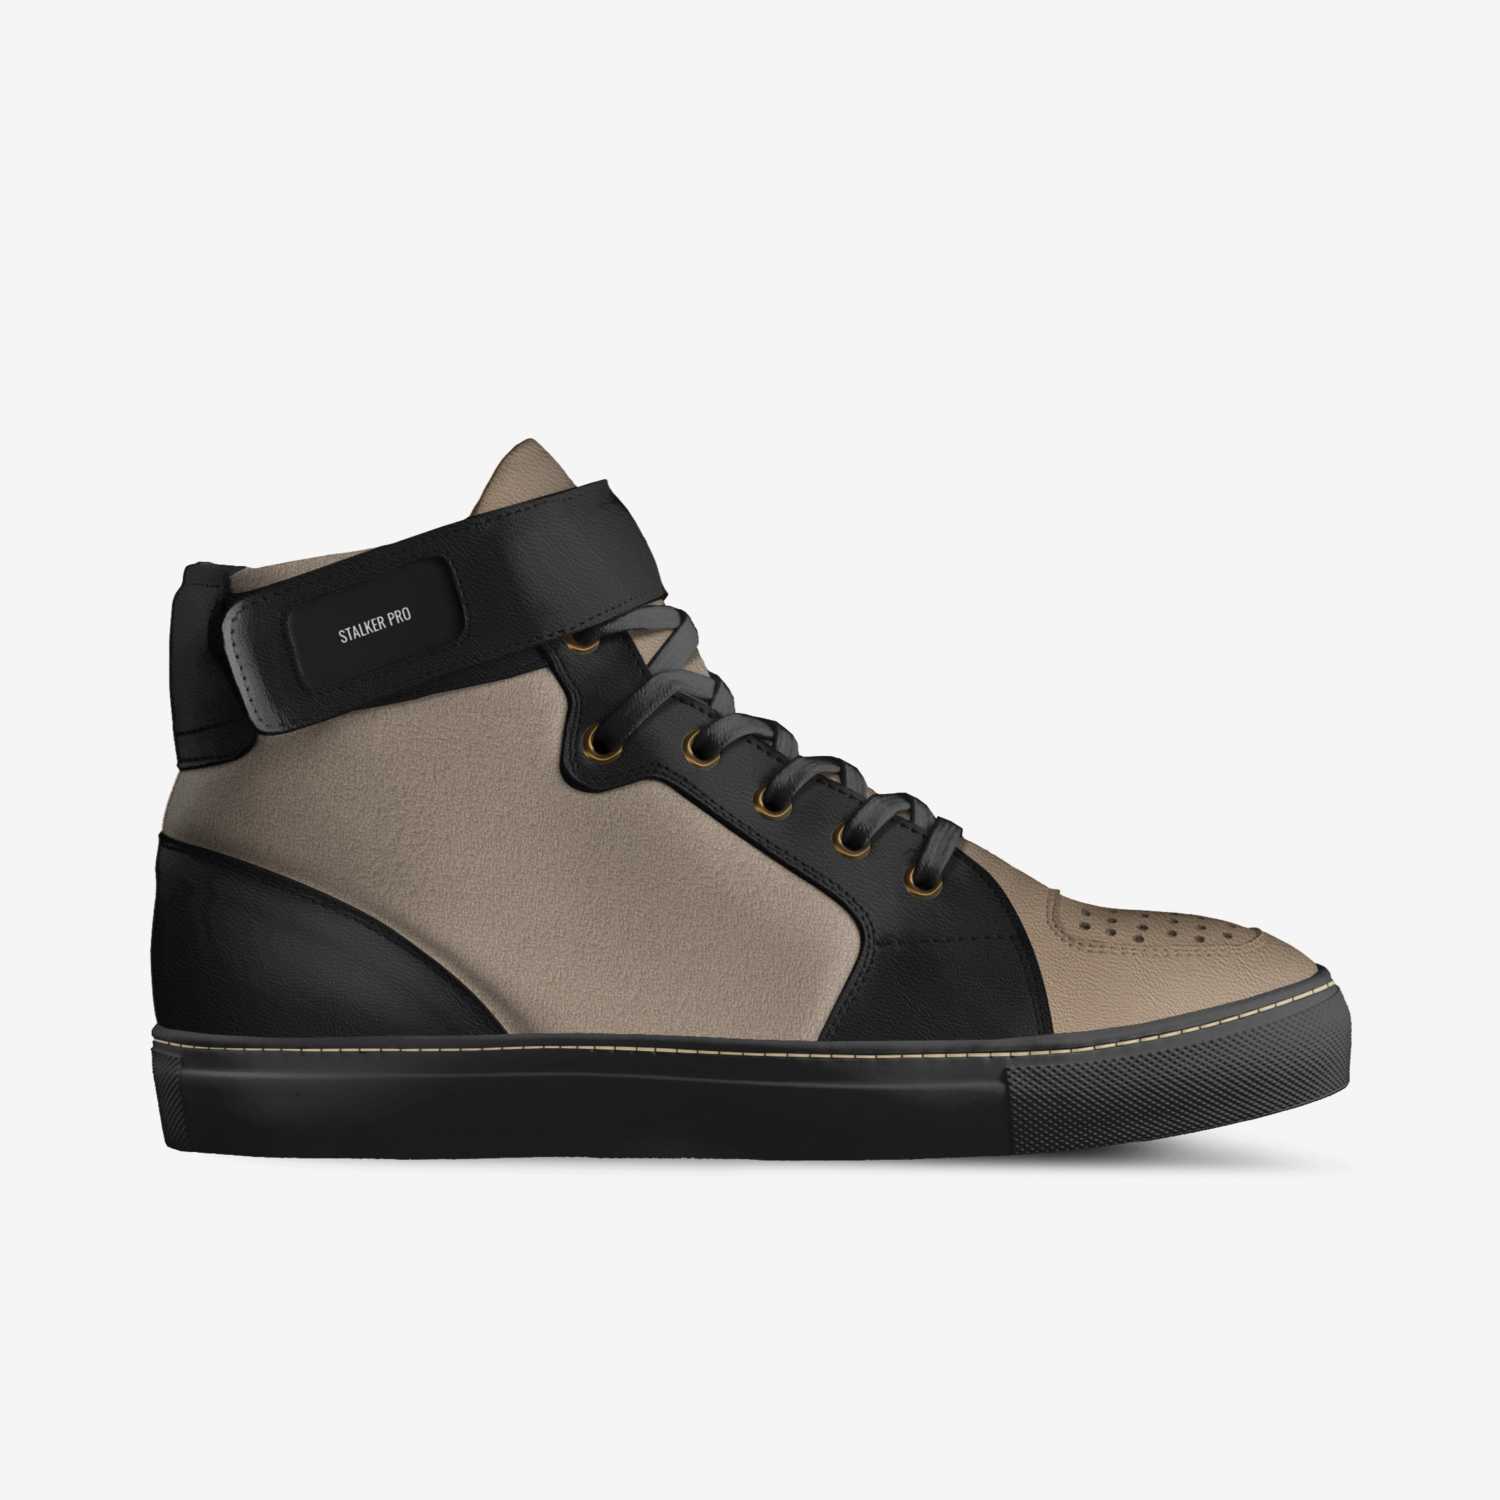 STALKER PRO | A Custom Shoe concept by Seena Esmati